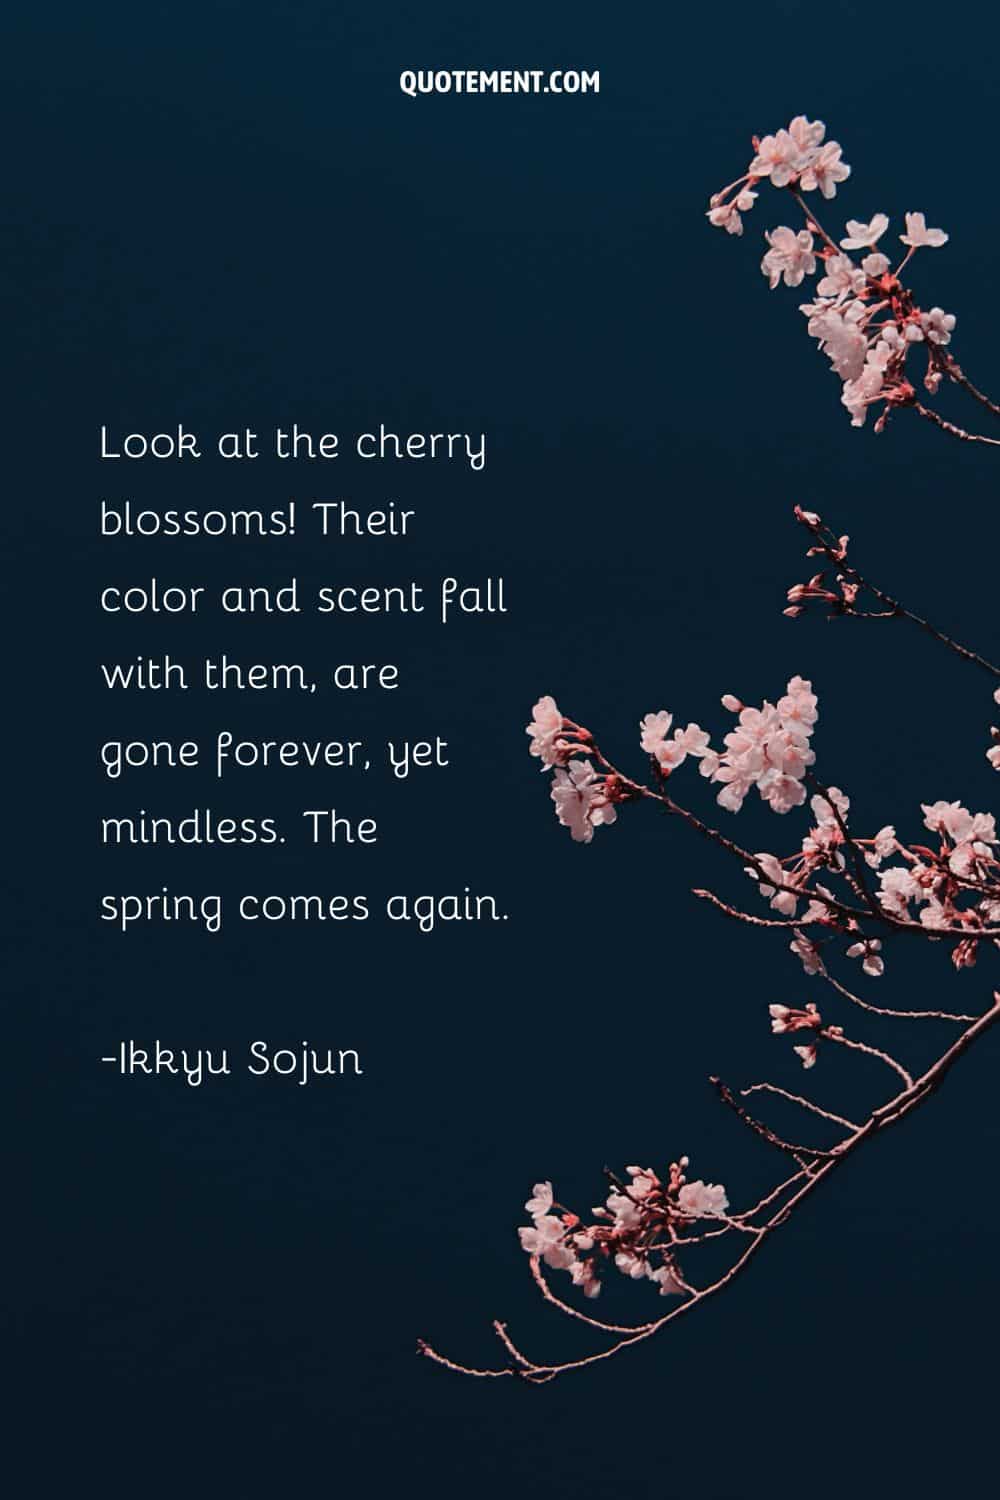 Sakura quote and cherry blossom branches.